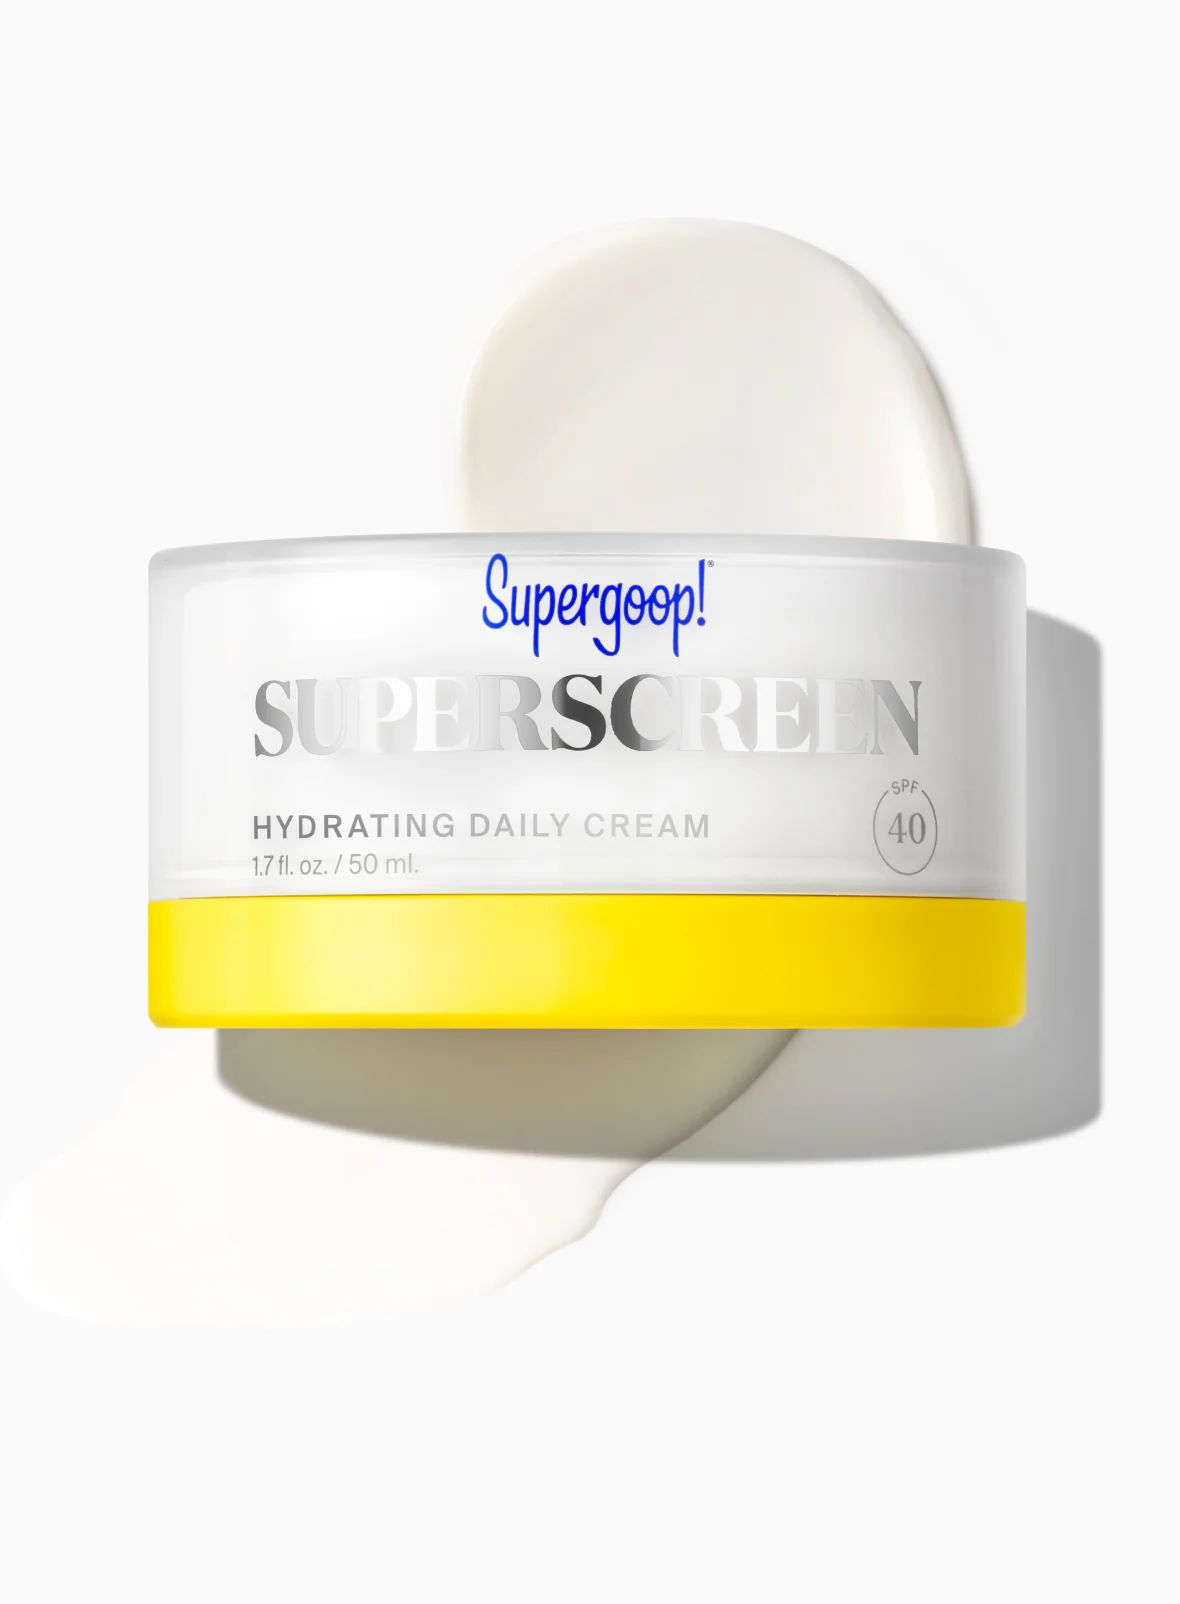 Superscreen Hydrating Daily Cream SPF 40 | Supergoop